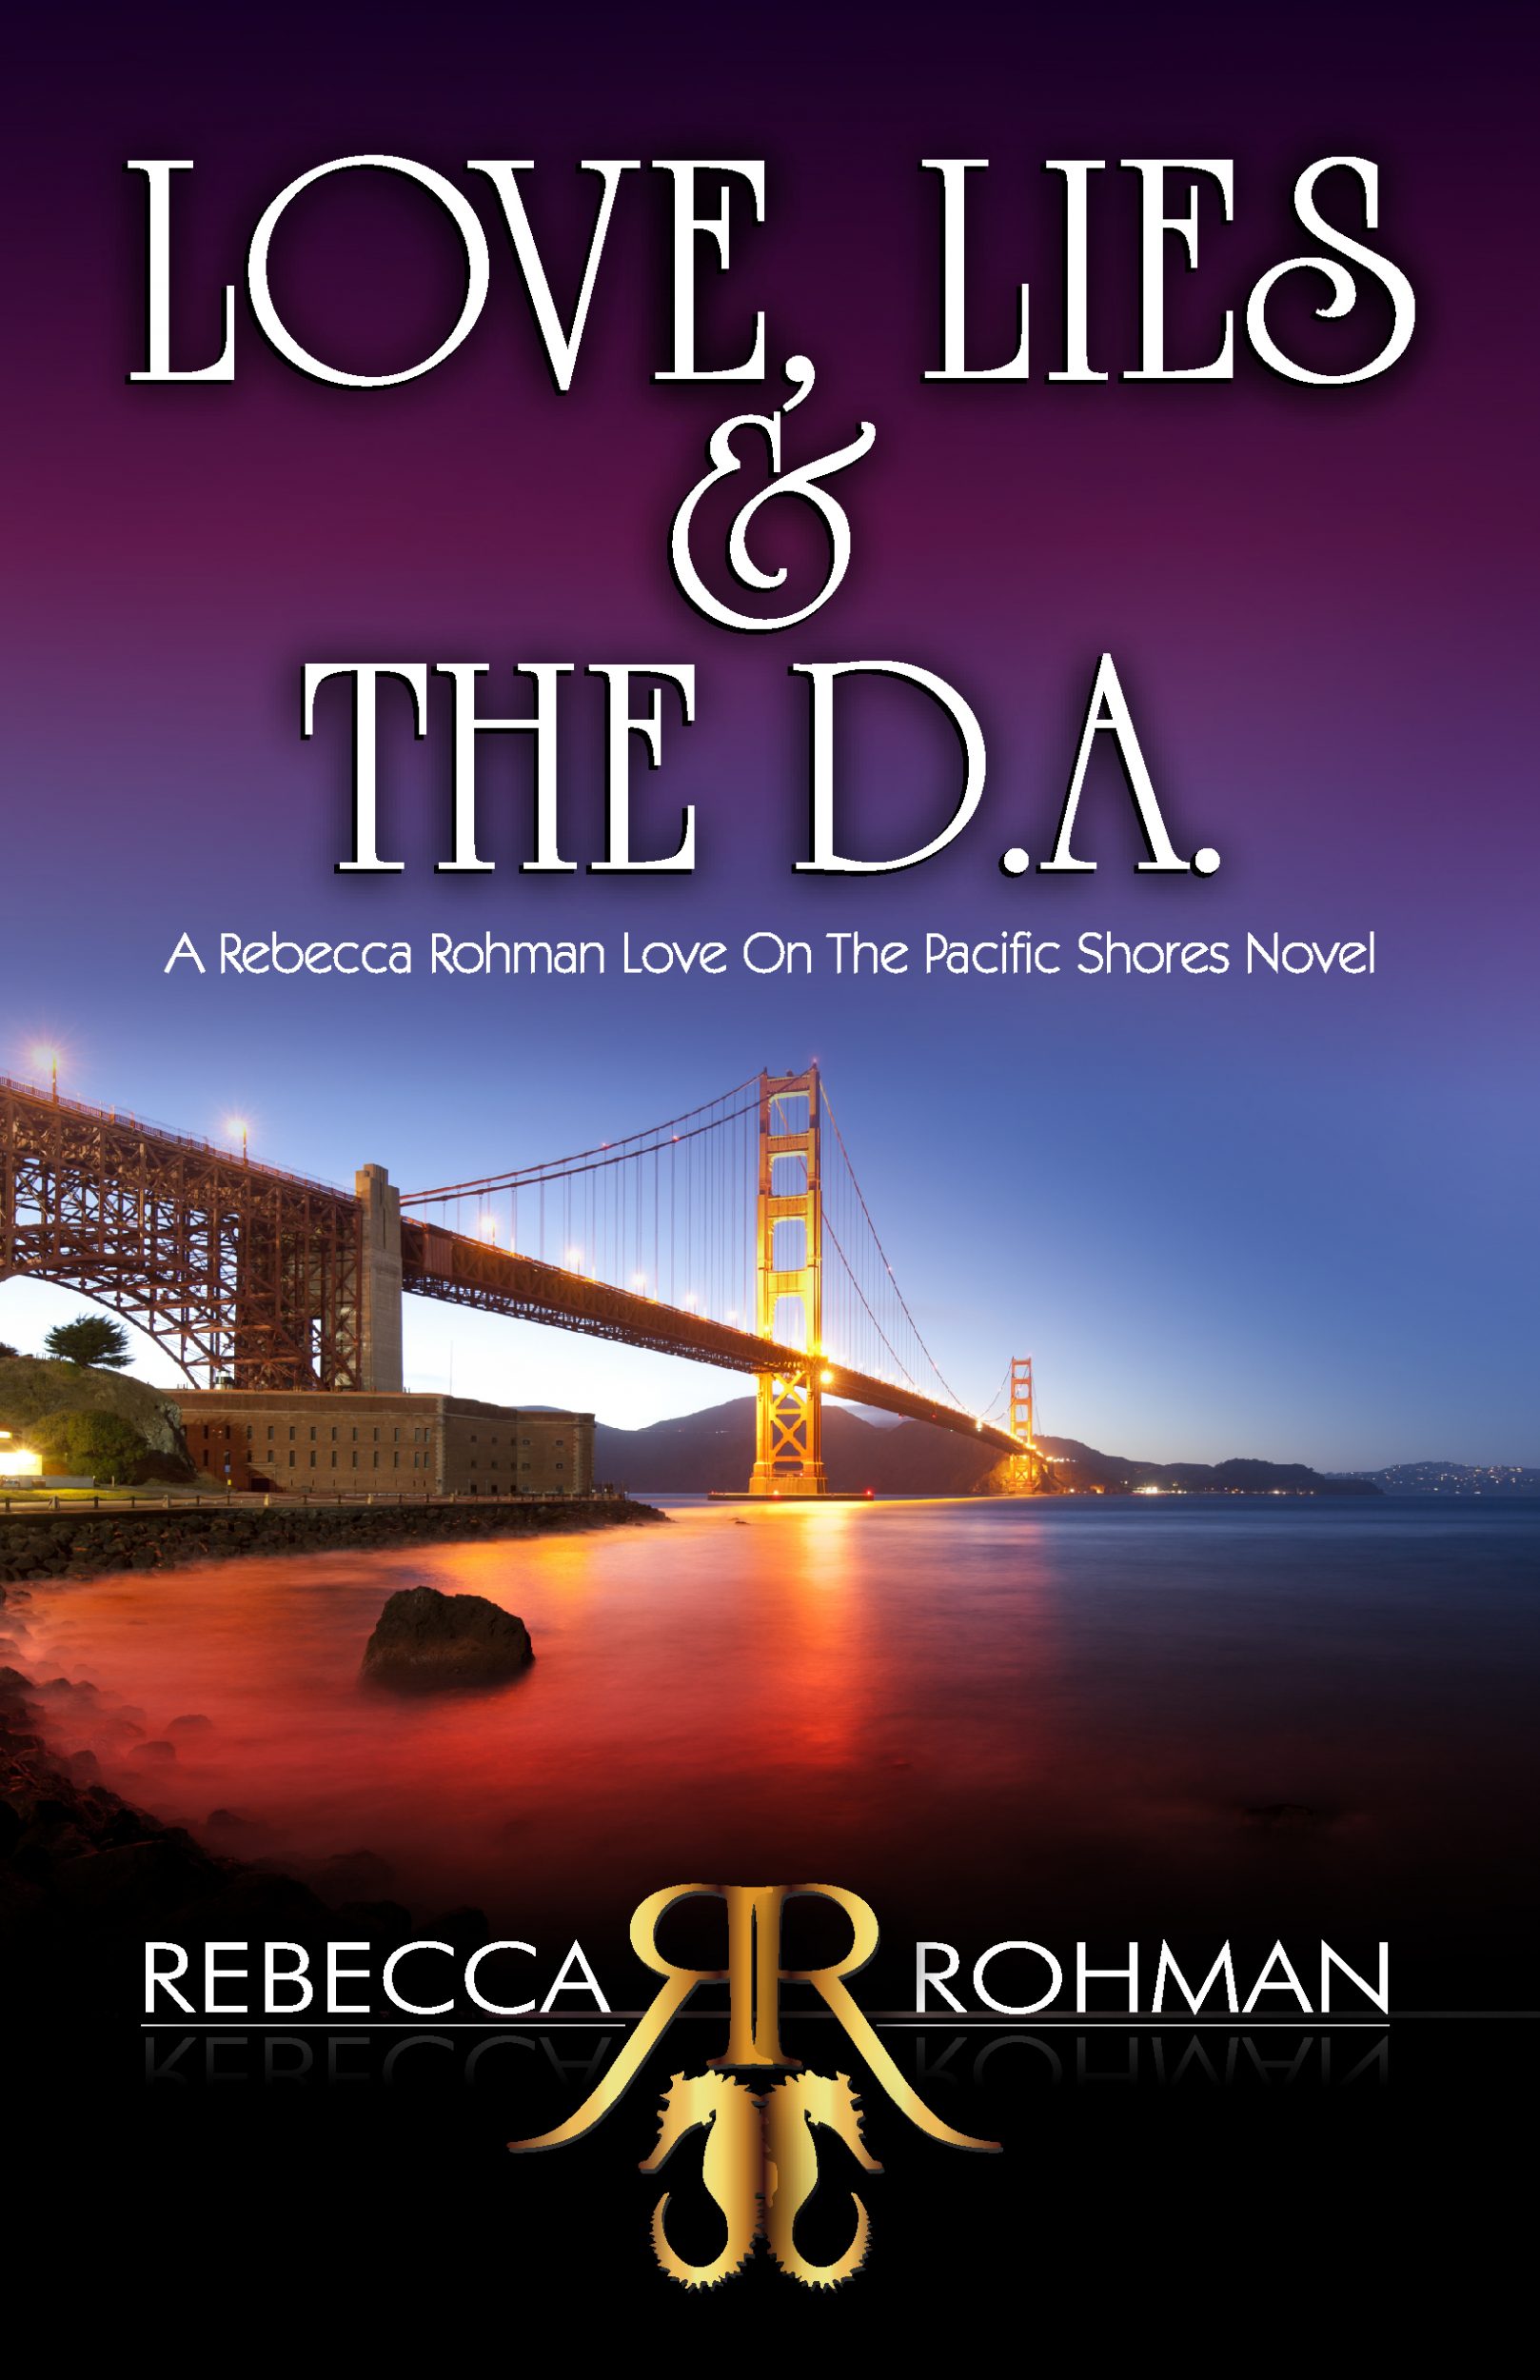 Love, Lies & The D.A. by Rebecca Rohman